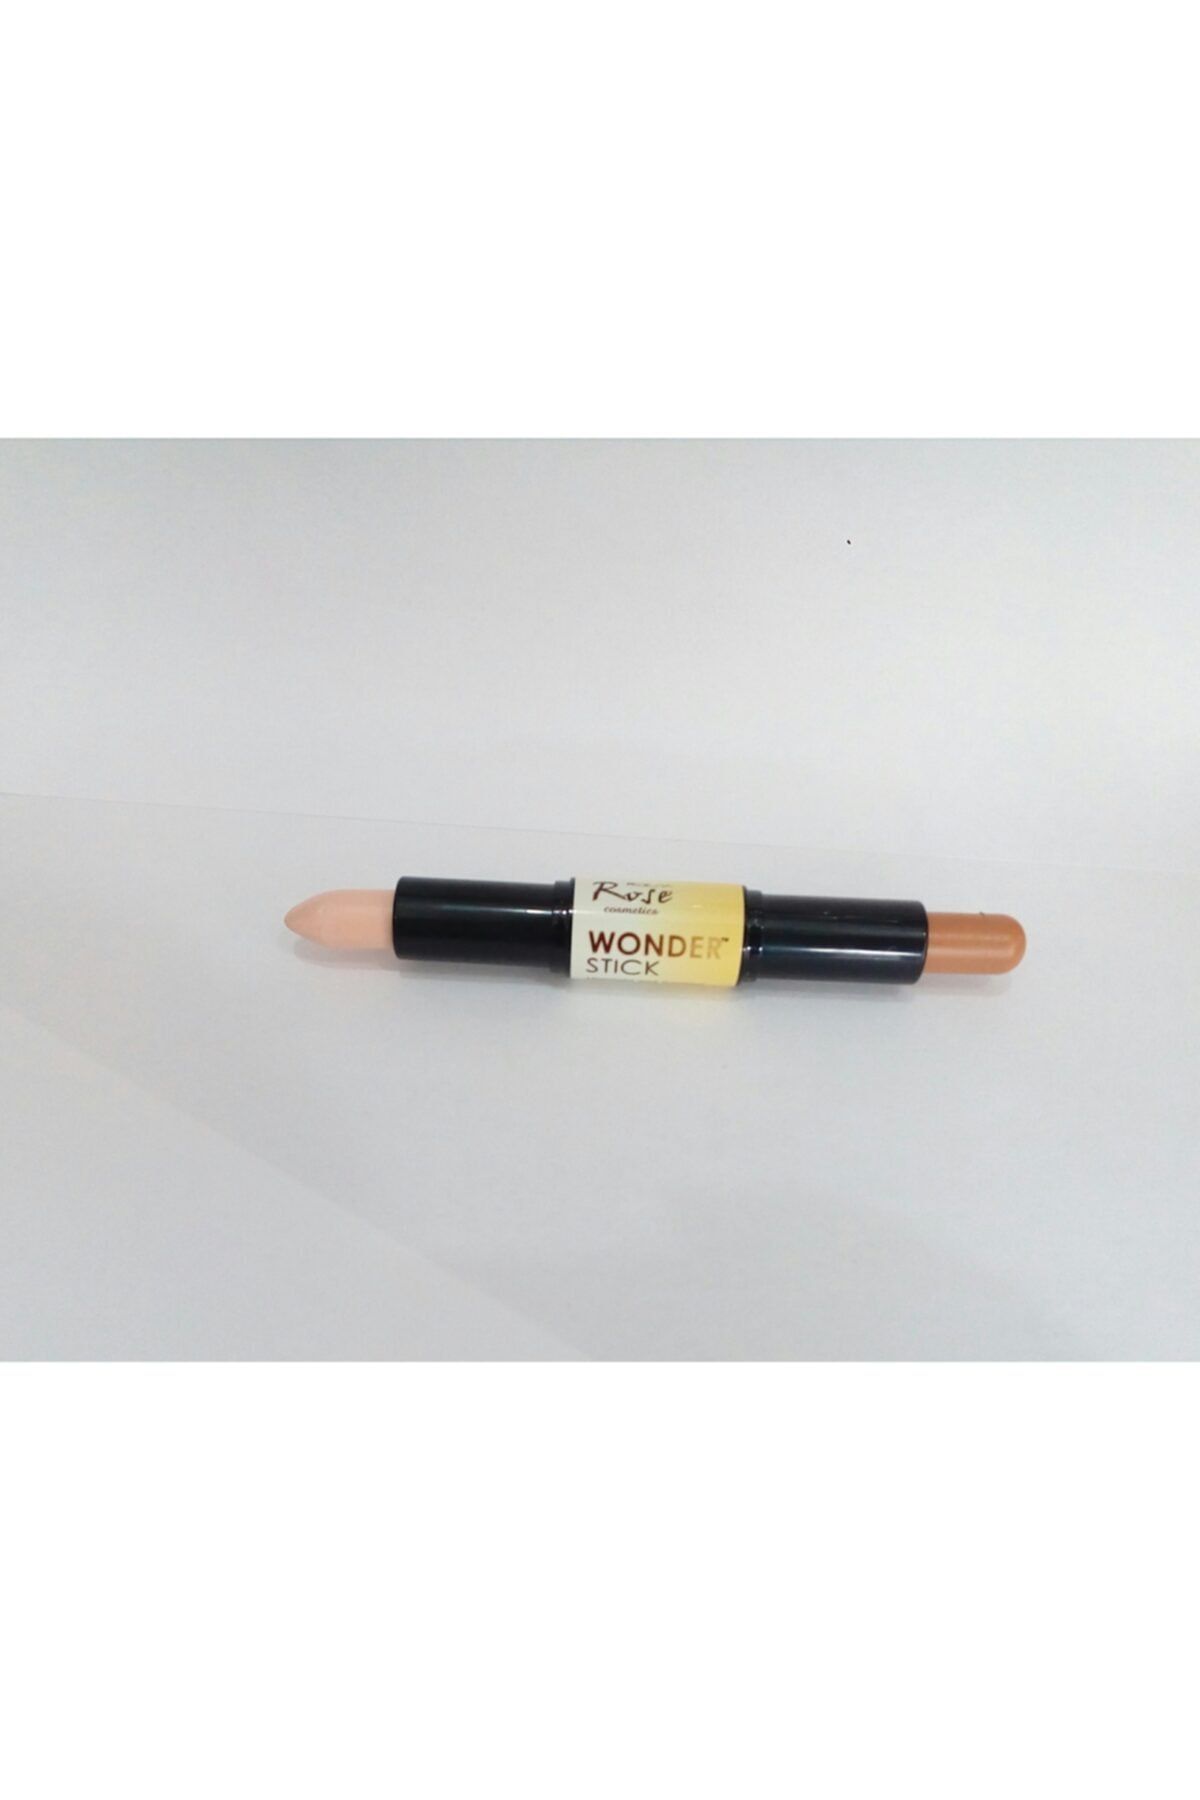 Rose Professional Makeup Stick Kontür & Aydınlatıcı - Wonder Stick Light